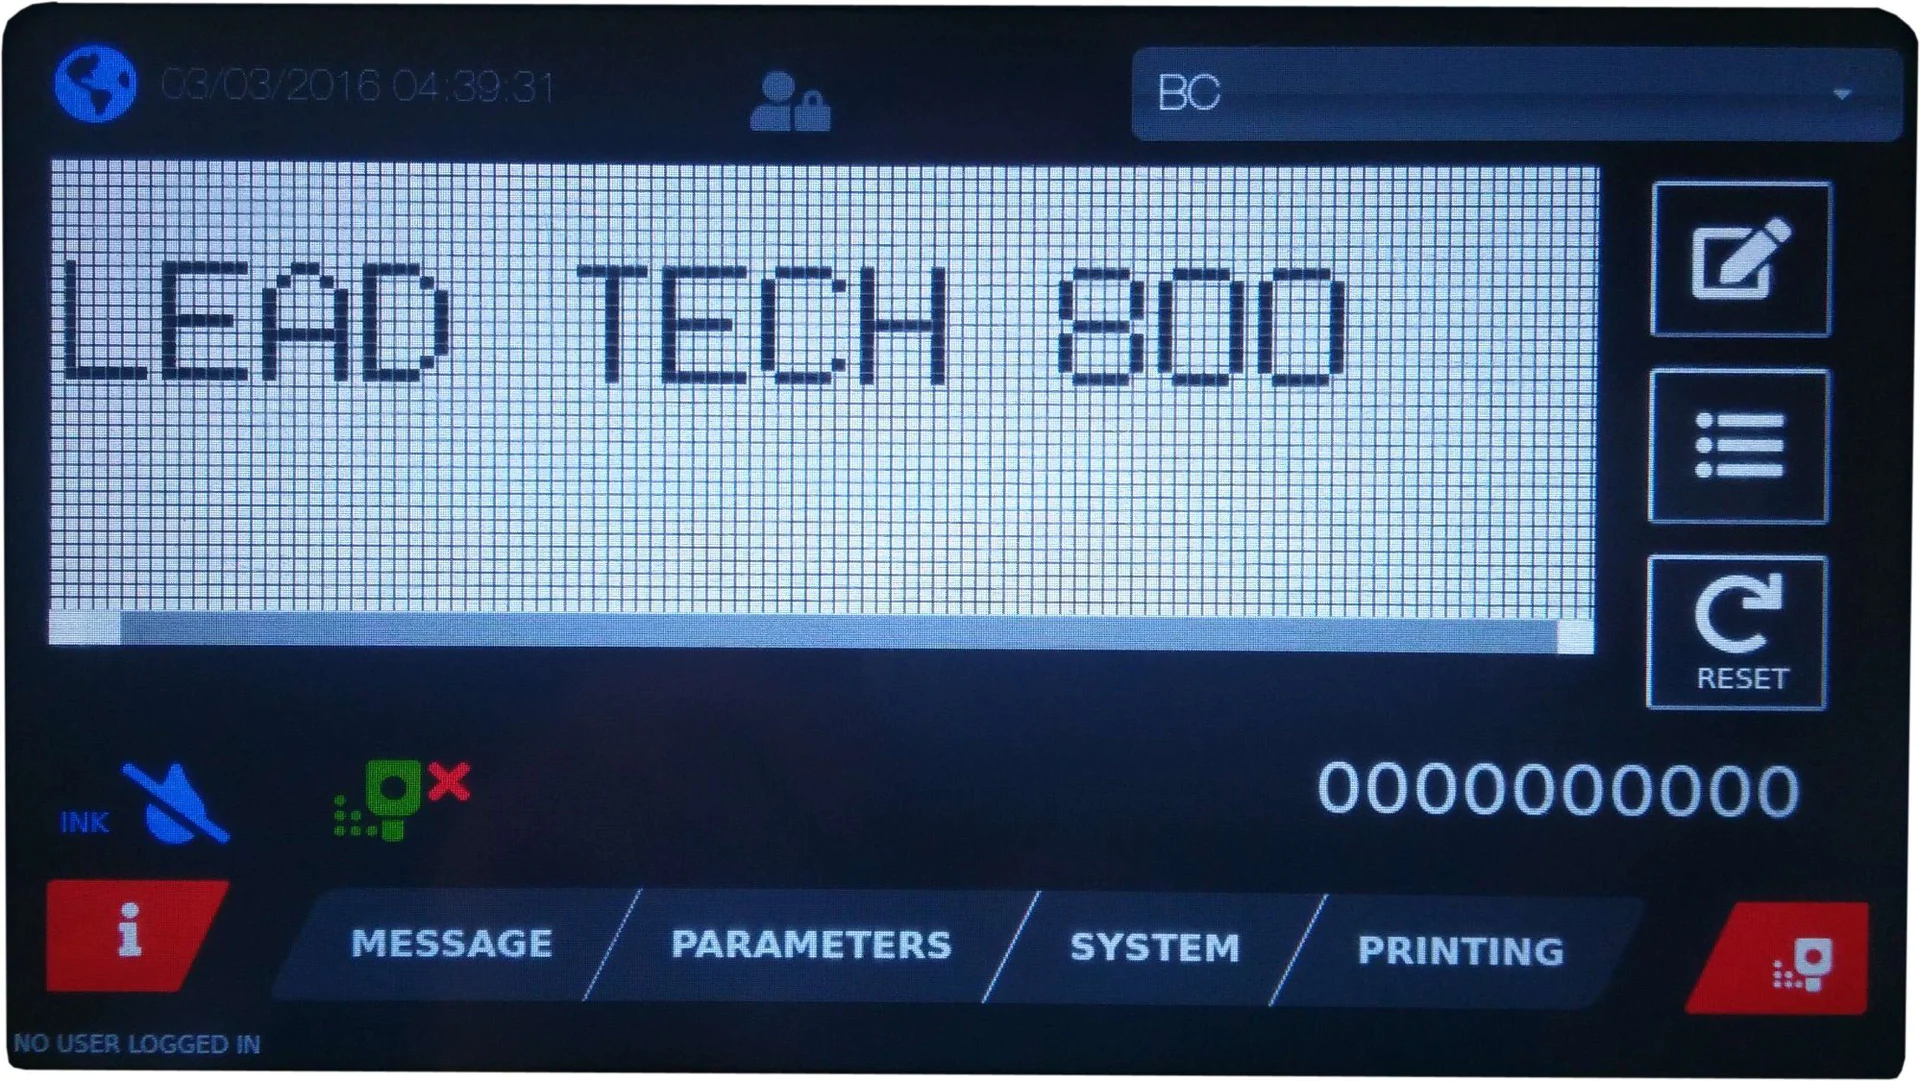 Lead Tech Lt800 Moving Automatic Head Printing Cij Inkjet Printer